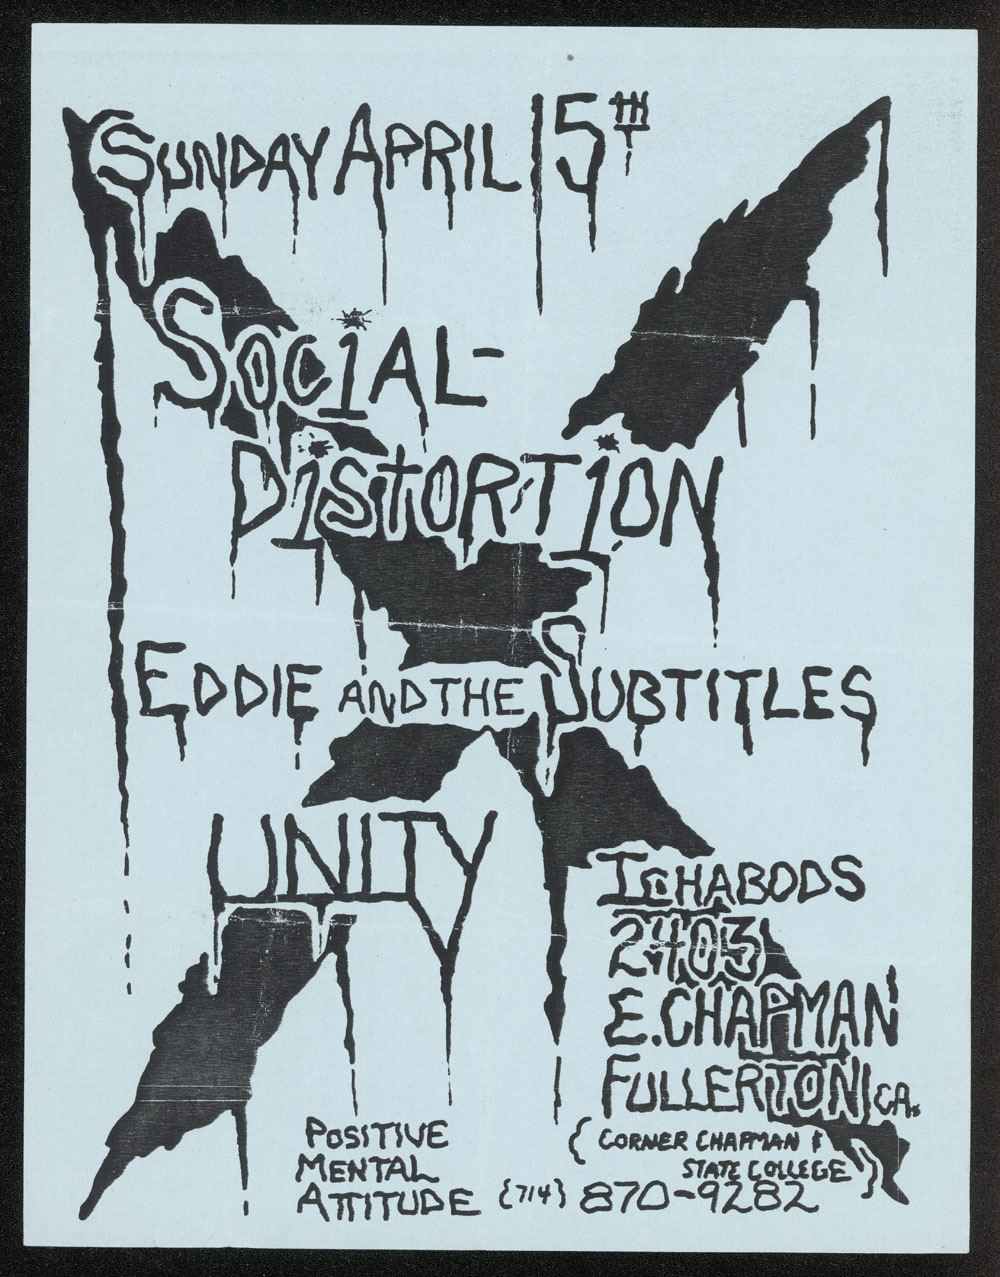 SOCIAL DISTORTION w/ Eddie & The Subtitles, Unity at Ichabod's